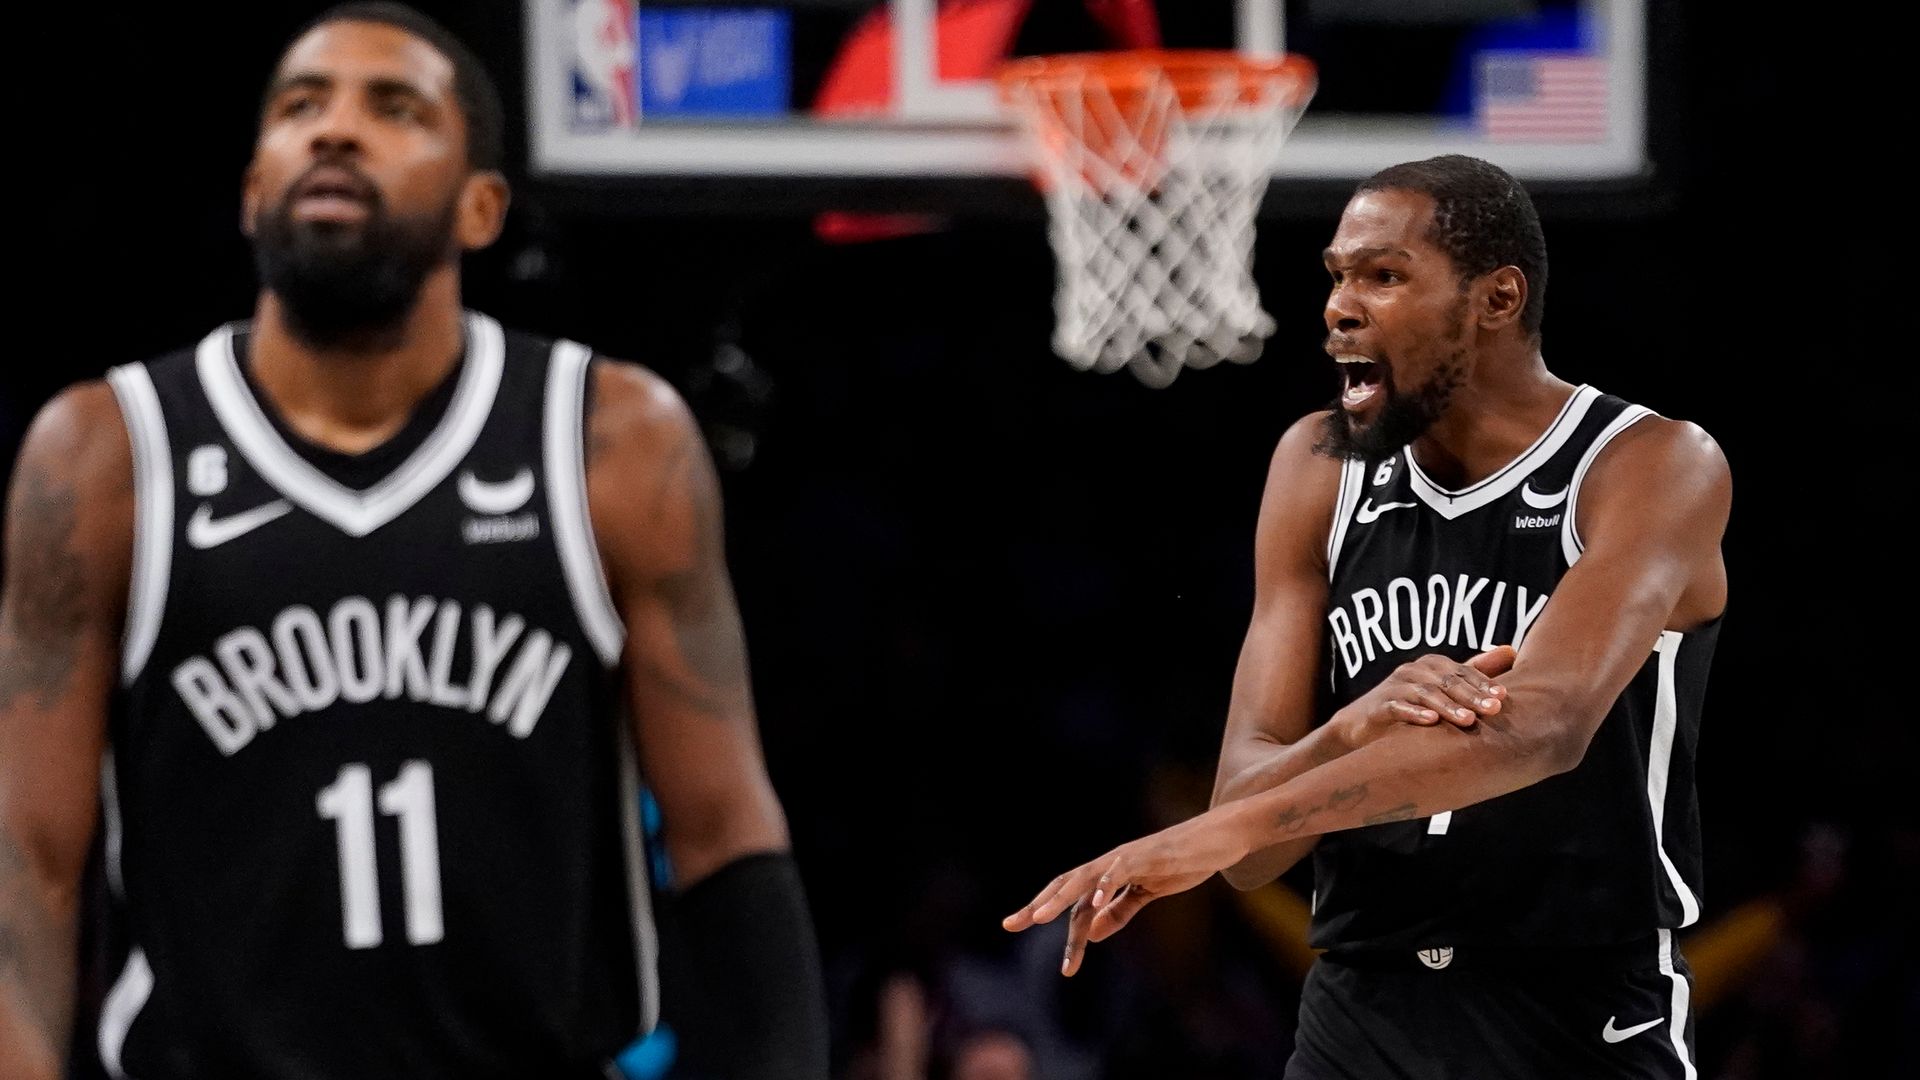 Inside the NBA: How do you fix Brooklyn?